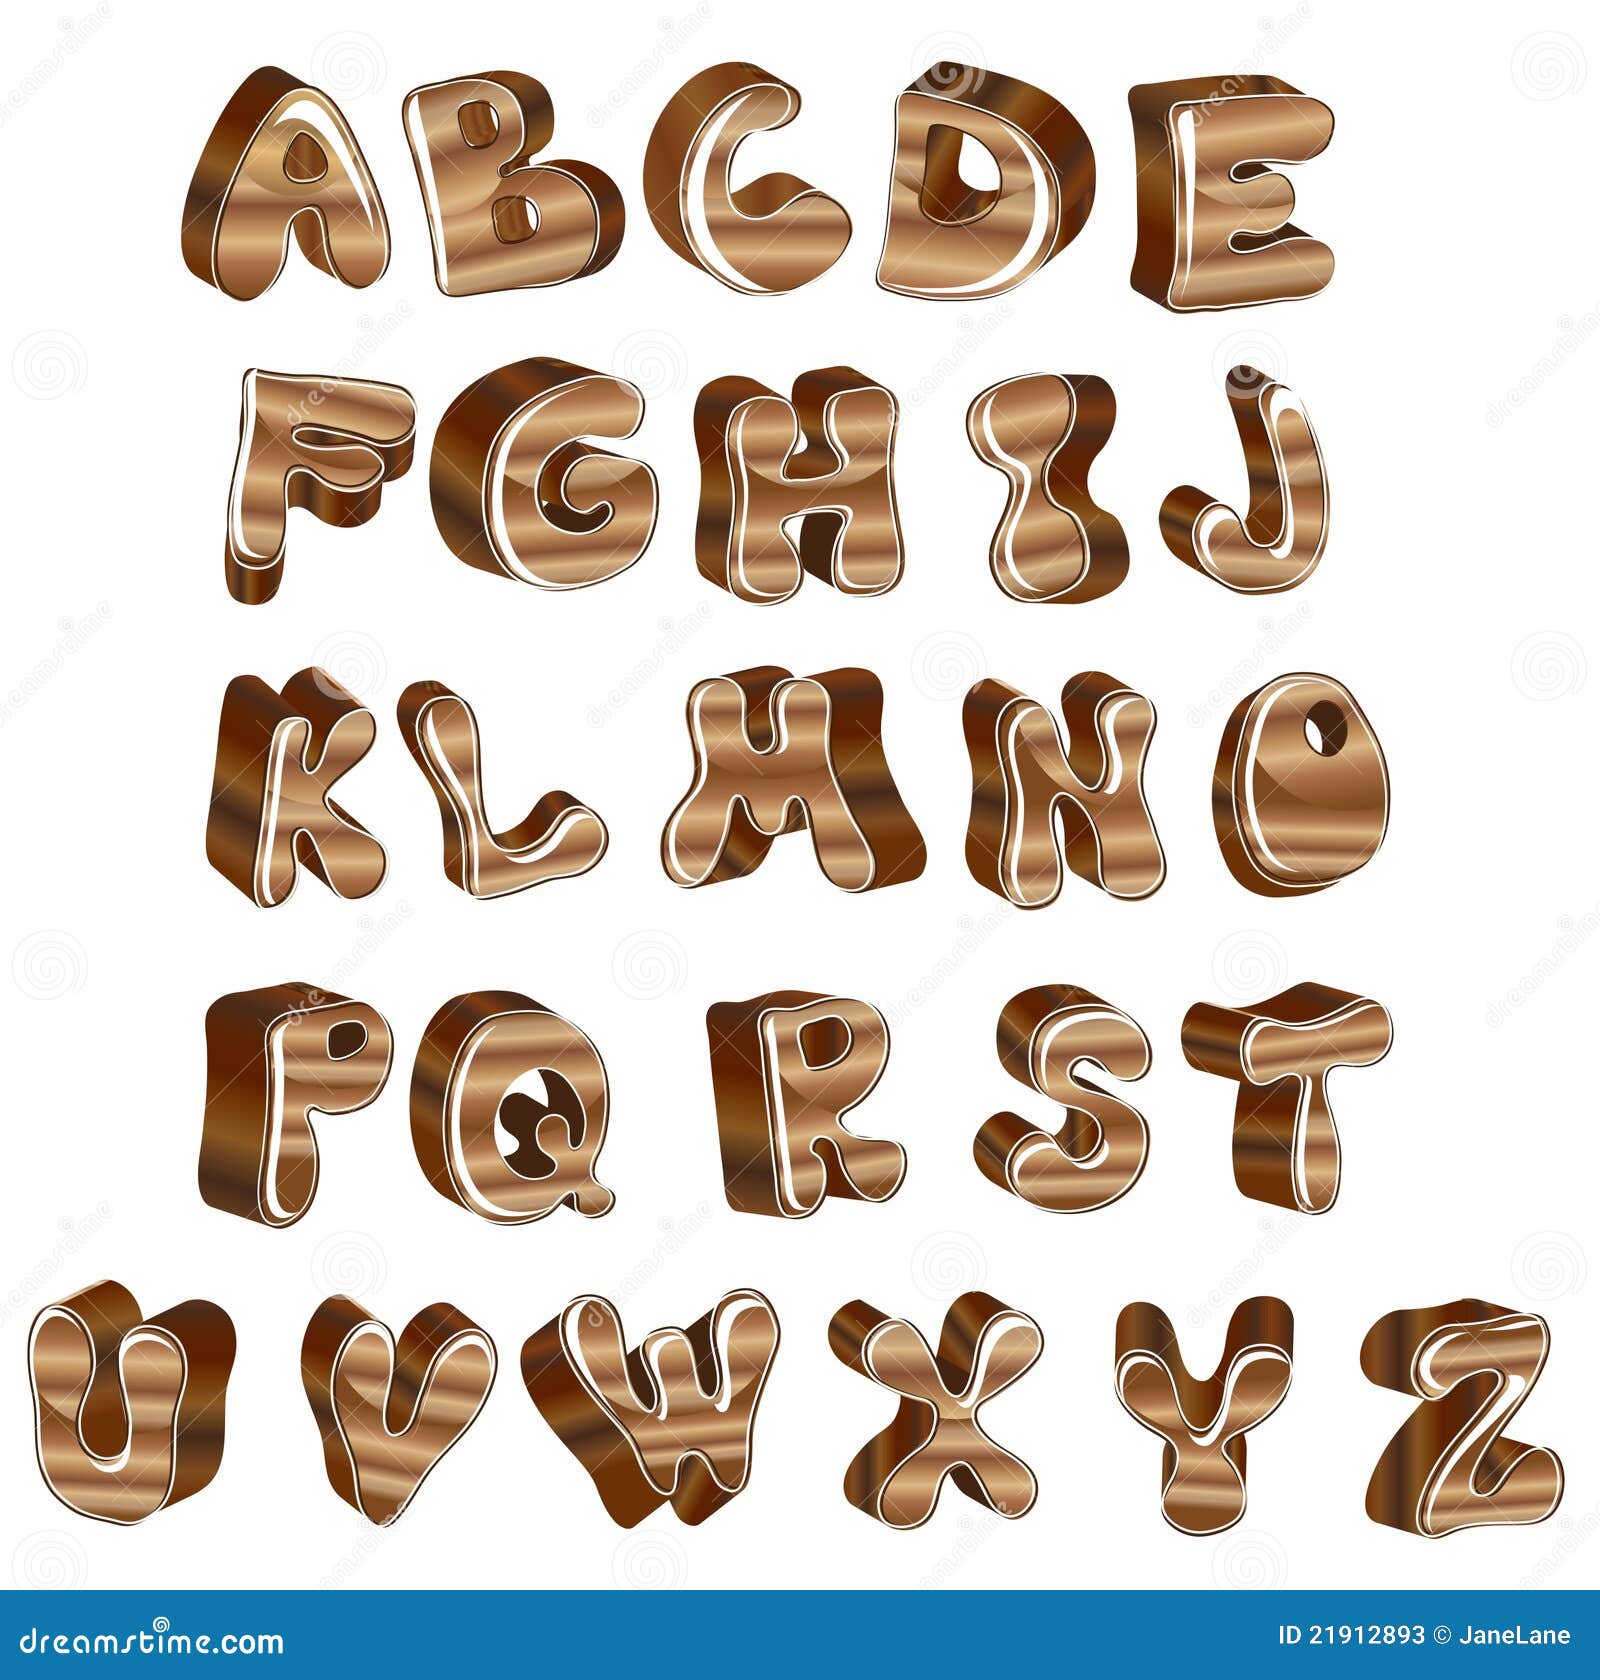 Cute glossy wood alphabet stock illustration. Illustration of creative ...